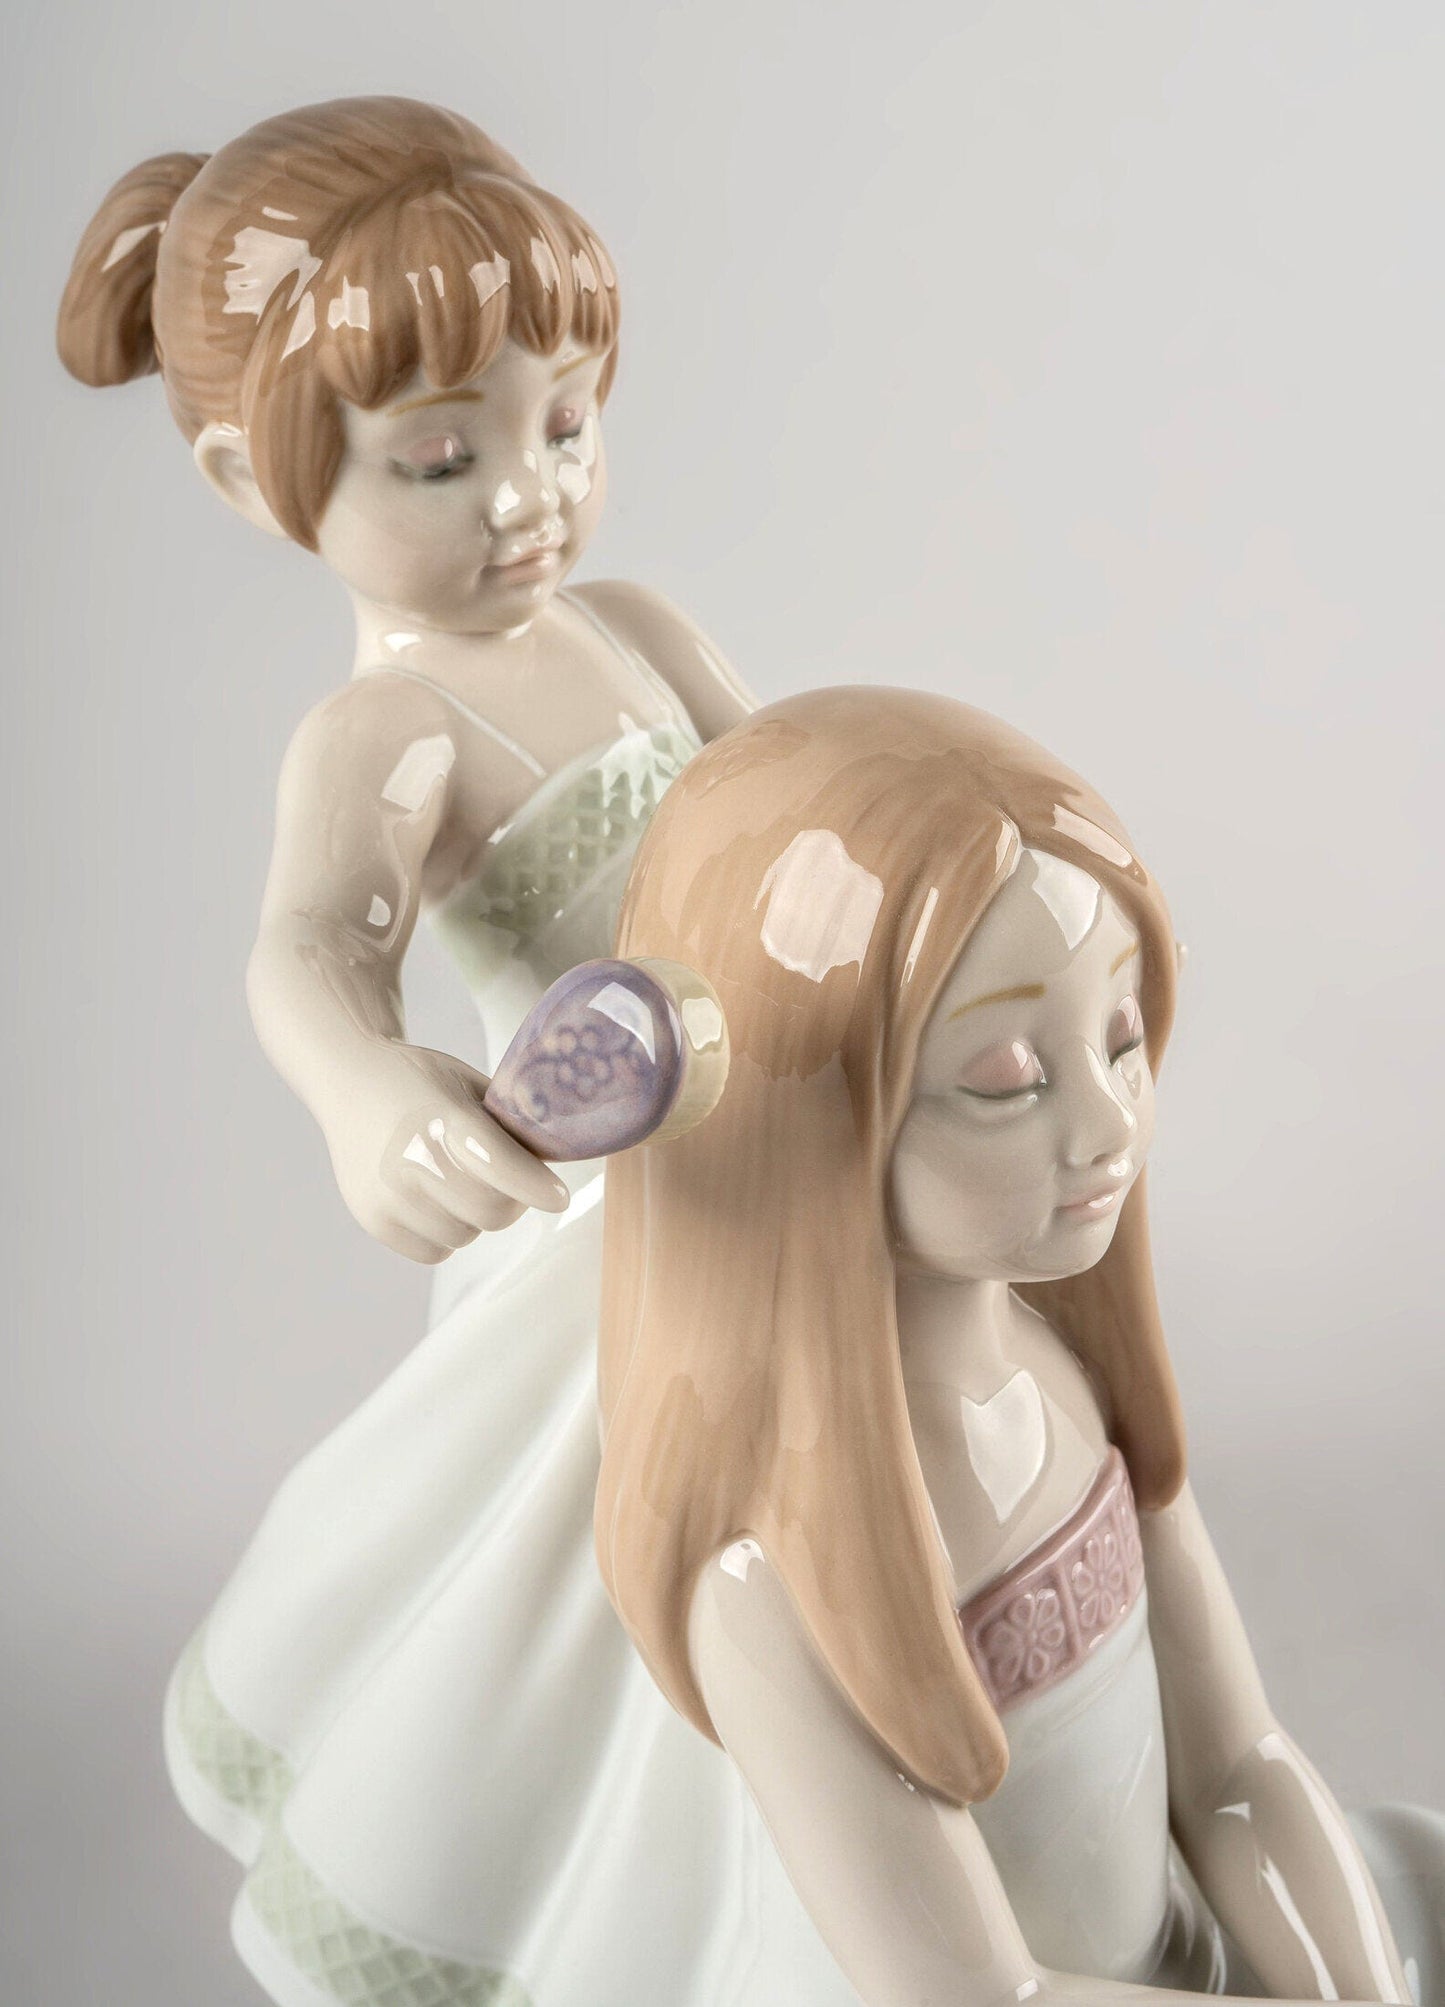 Combing Your Hair Girls Sculpture